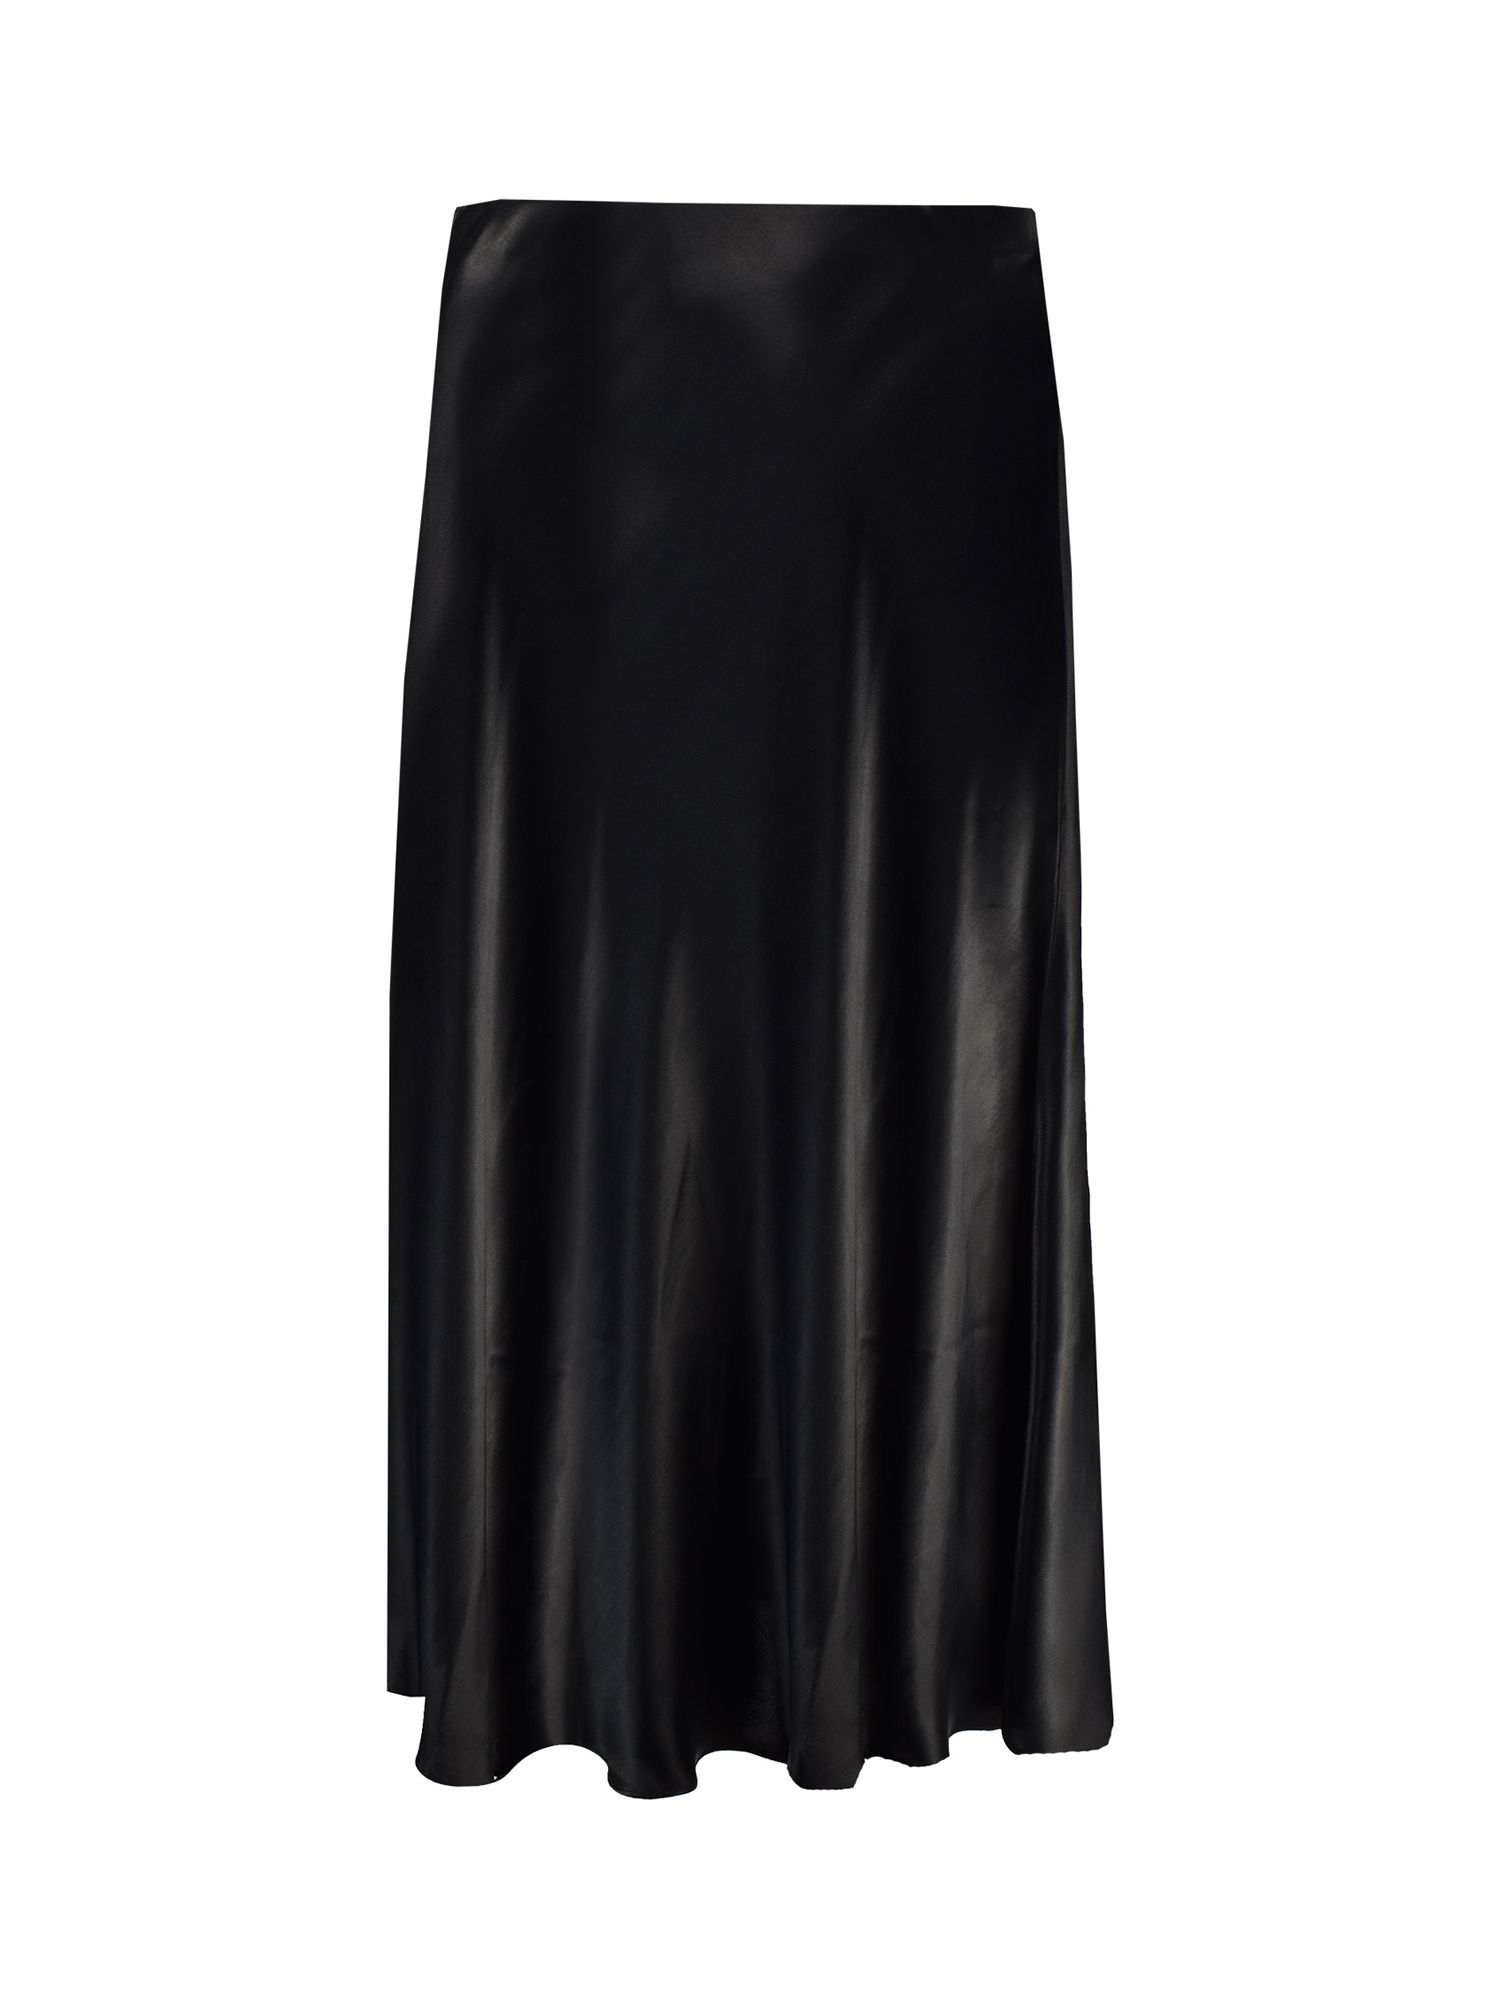 Live Unlimited Curve Petite Black Bias Cut Satin Slip Skirt, Black, 18